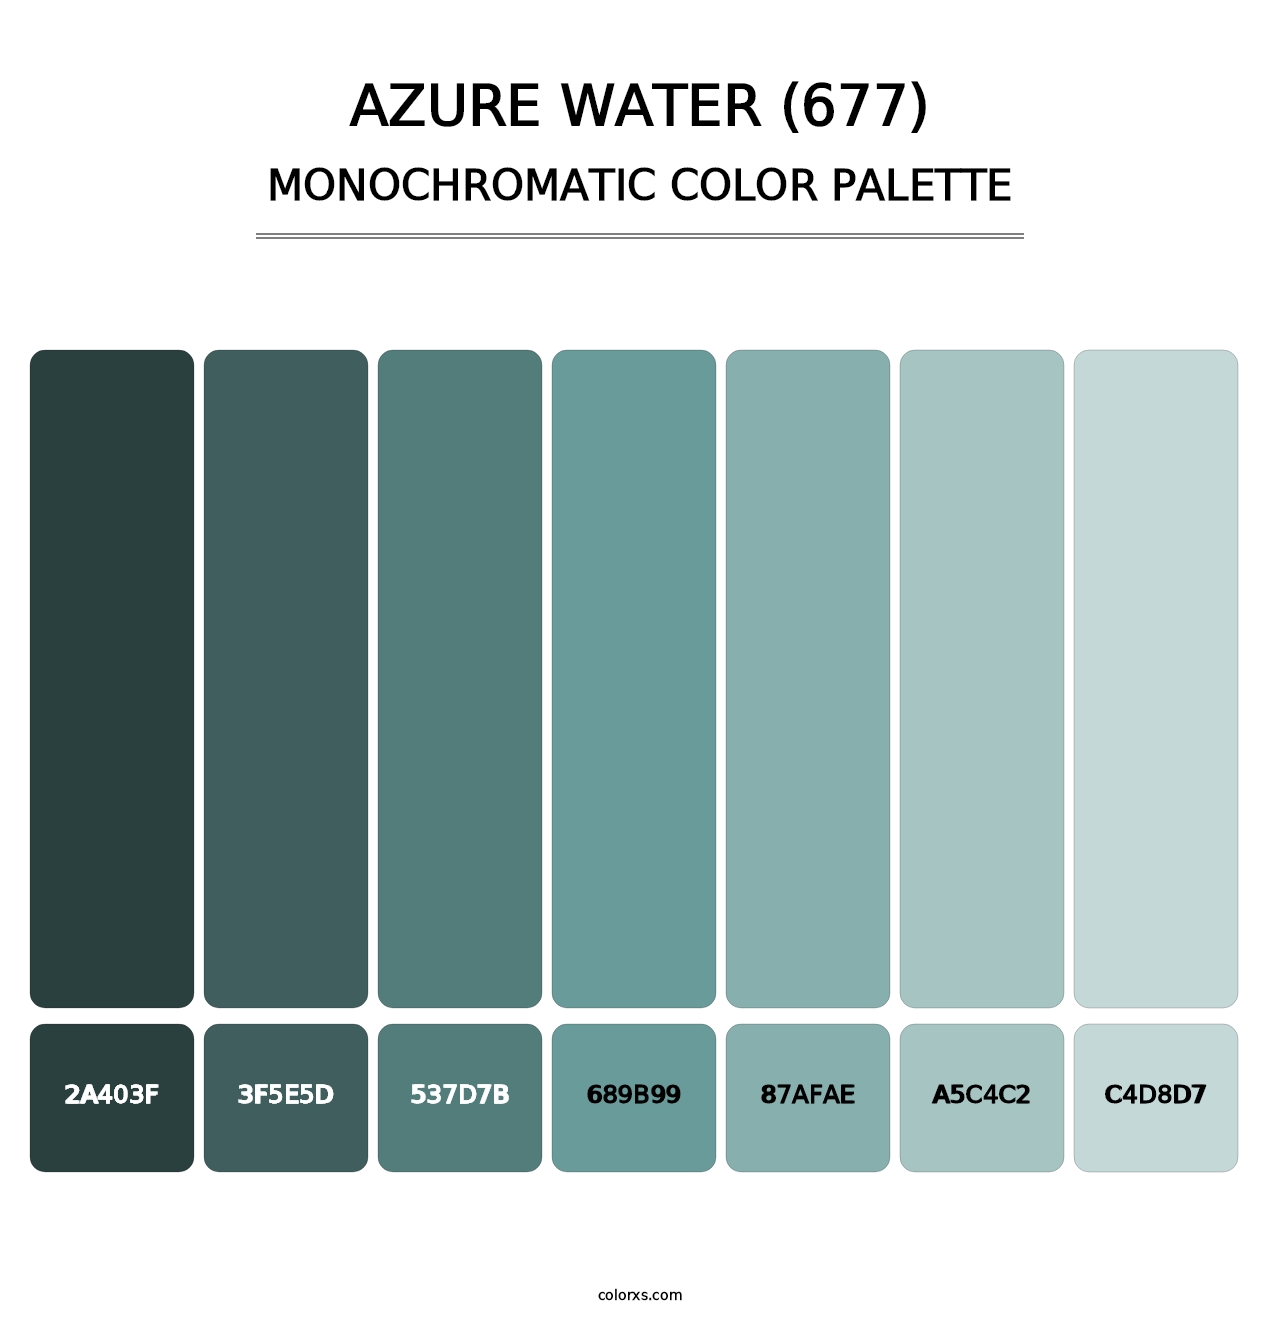 Azure Water (677) - Monochromatic Color Palette